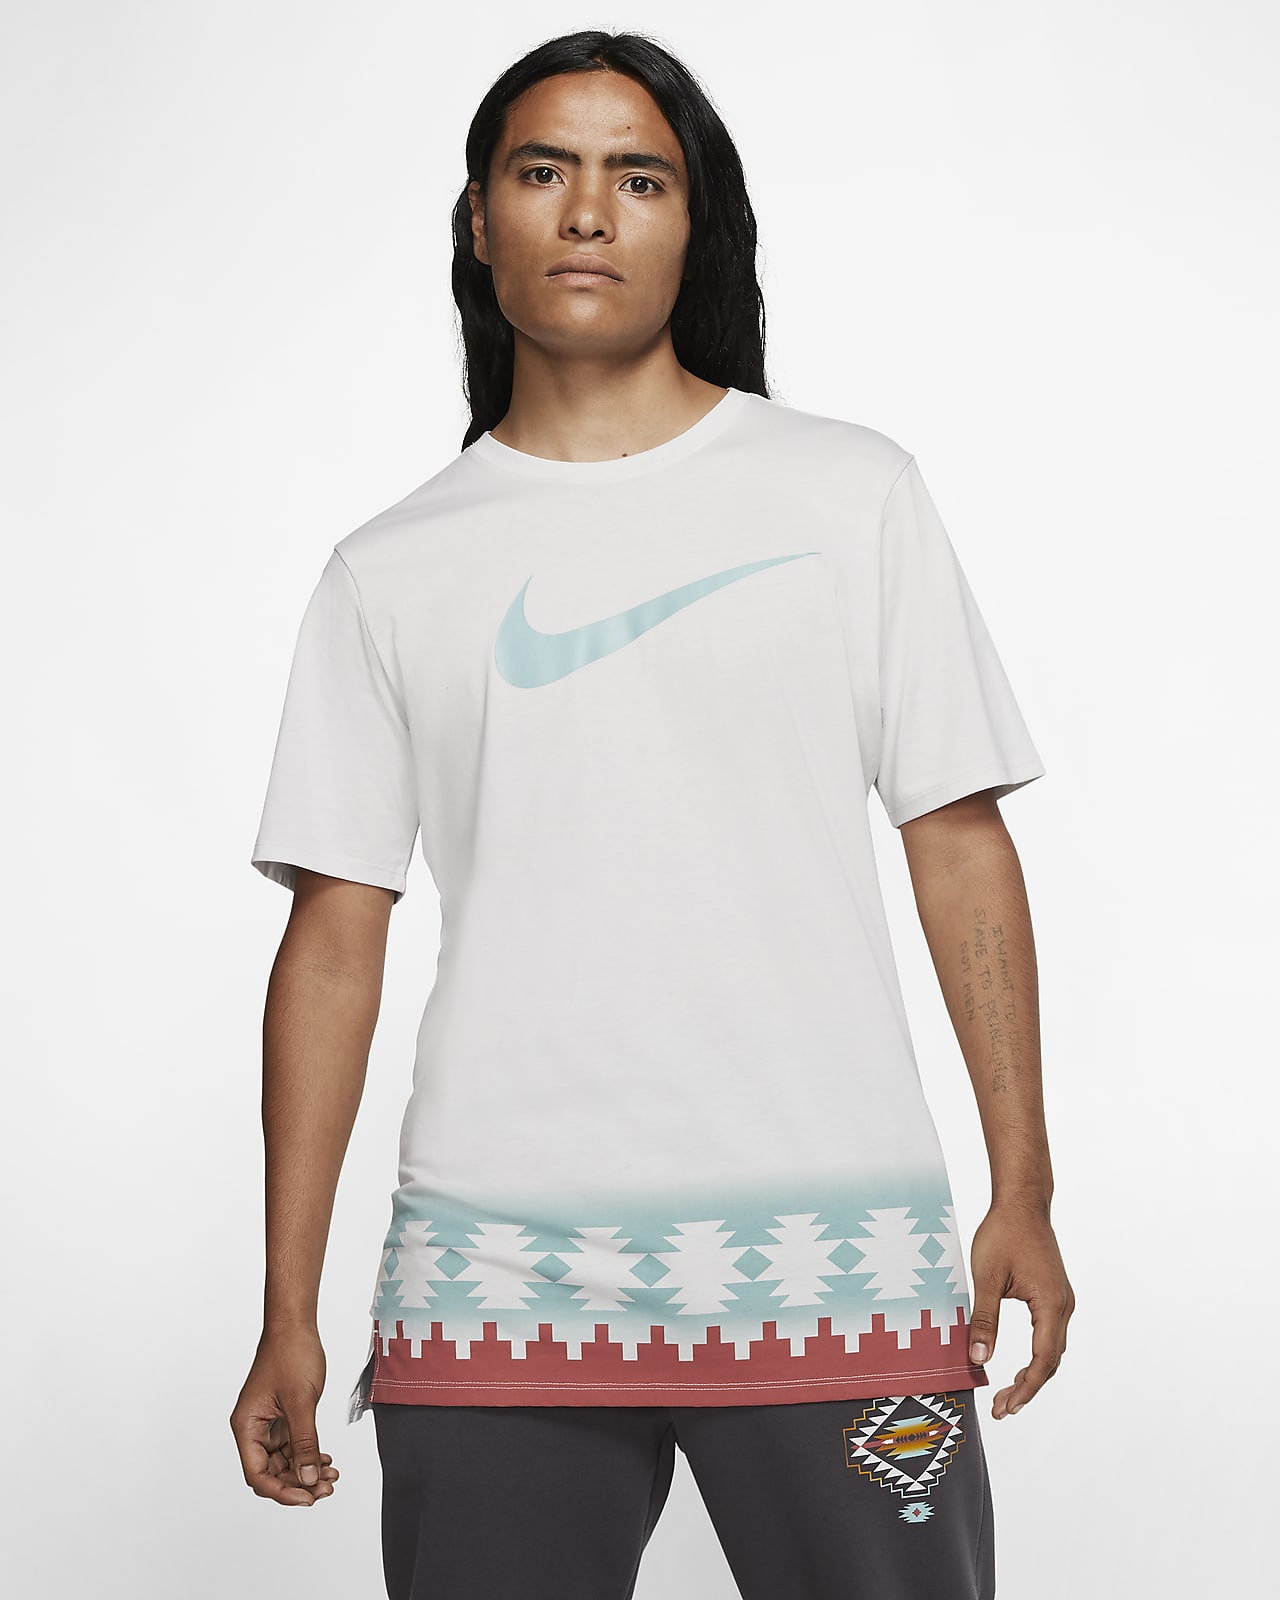 Nike Sportswear N7 Men's T-Shirt. Nike.com